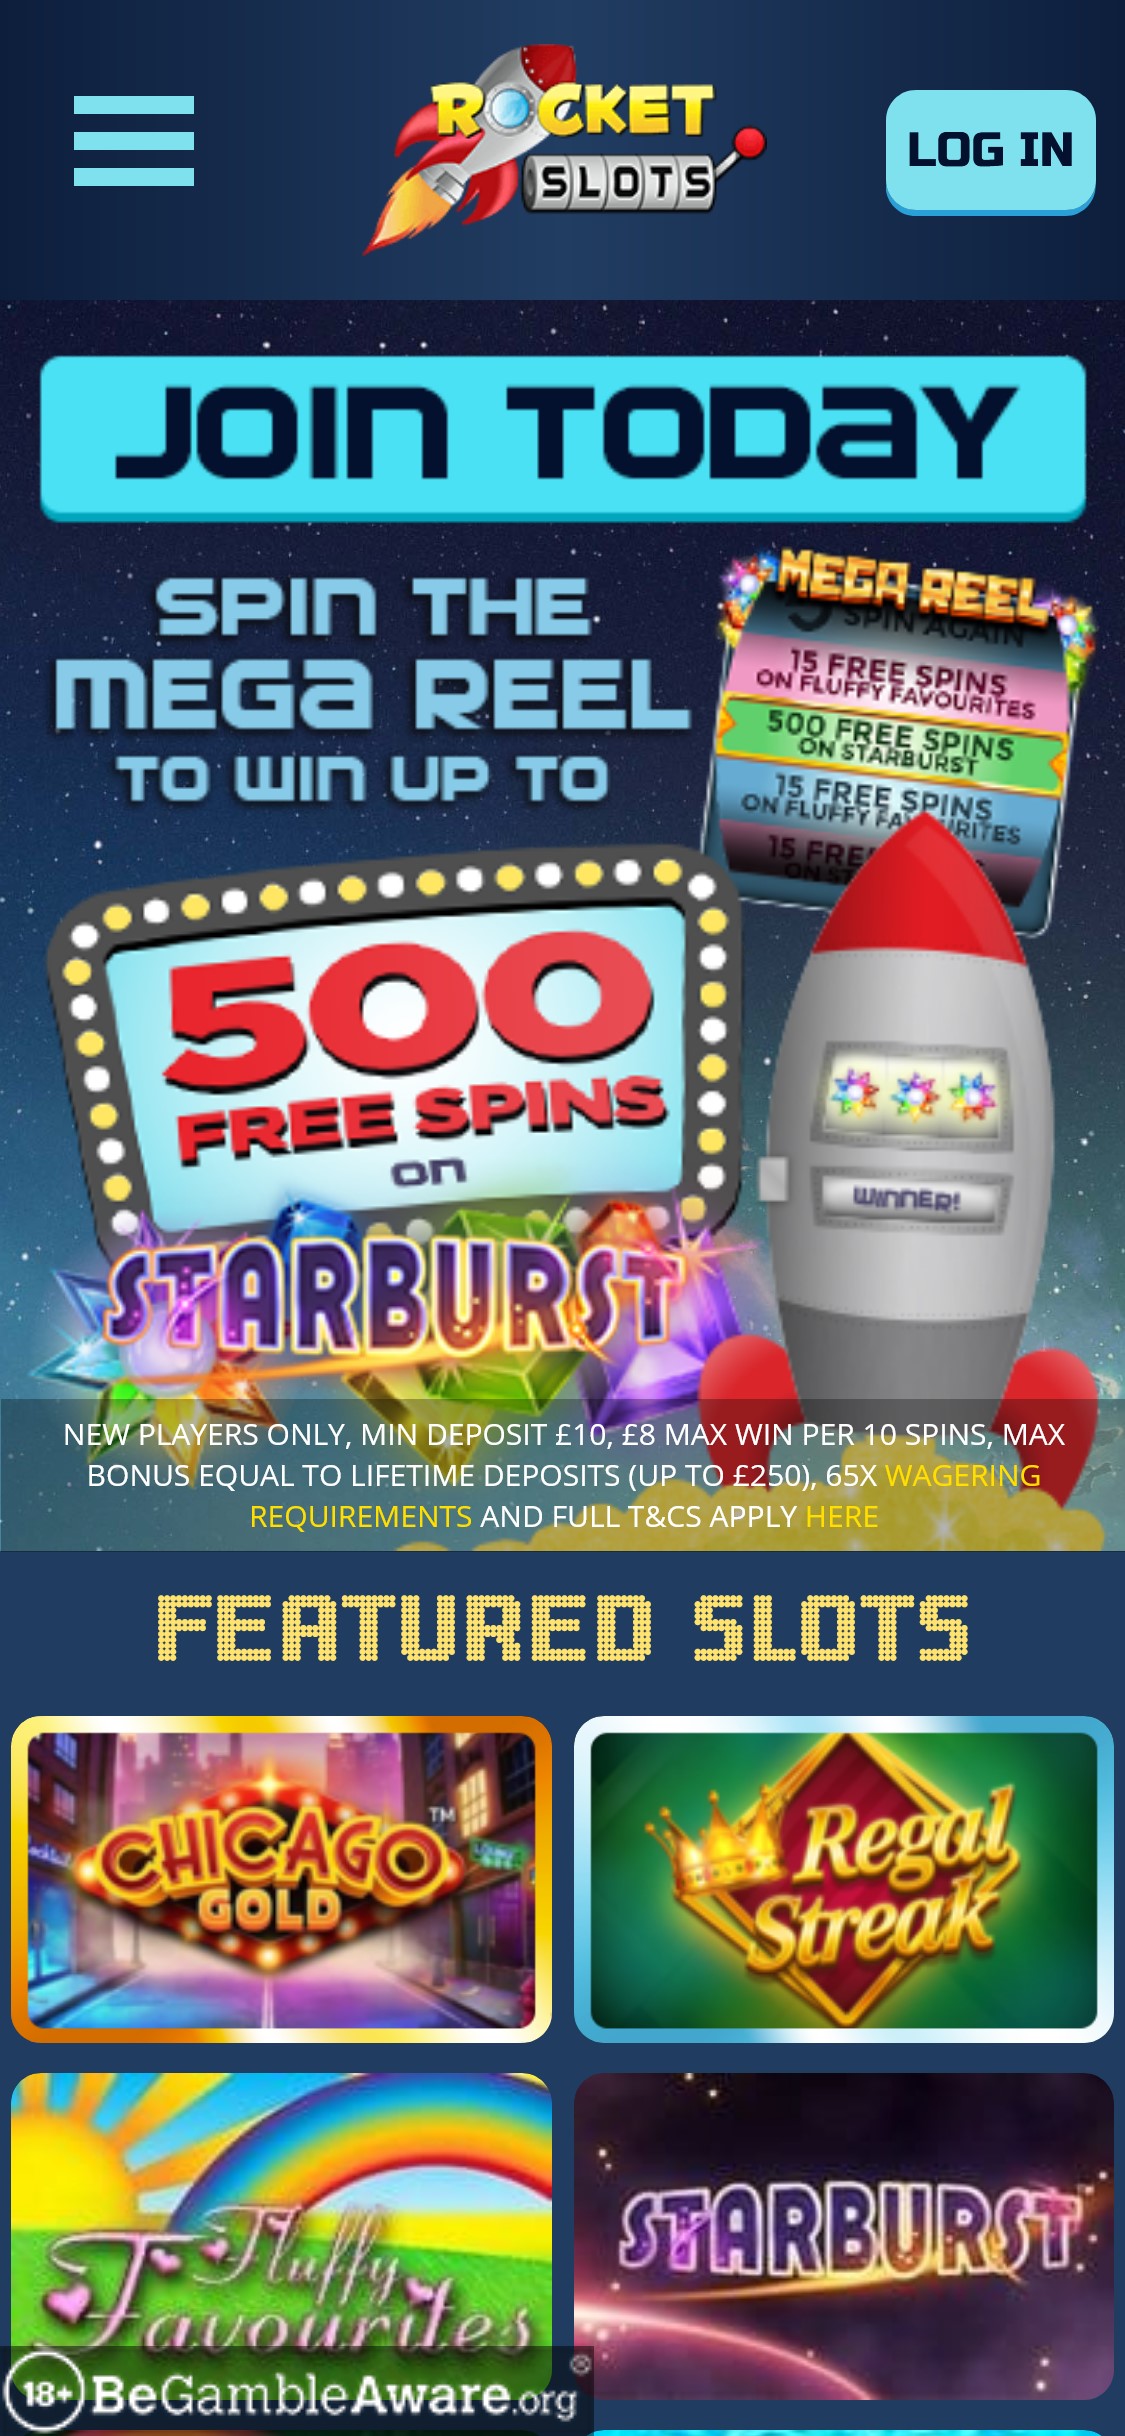 Rocket Slots Casino Mobile Review